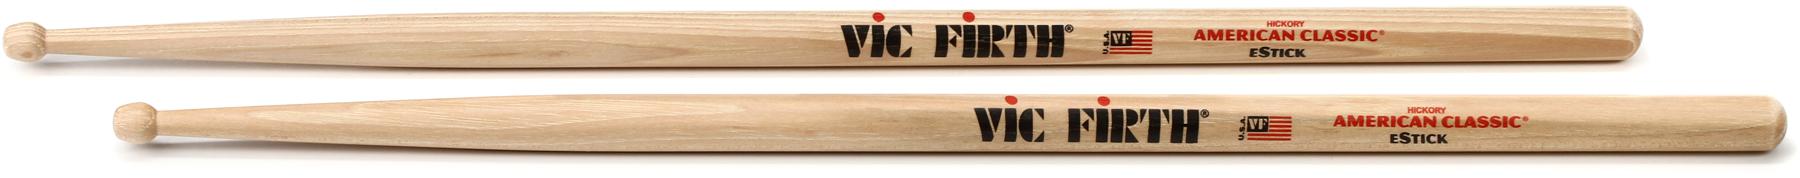 1. Vic Firth American Classic eStick